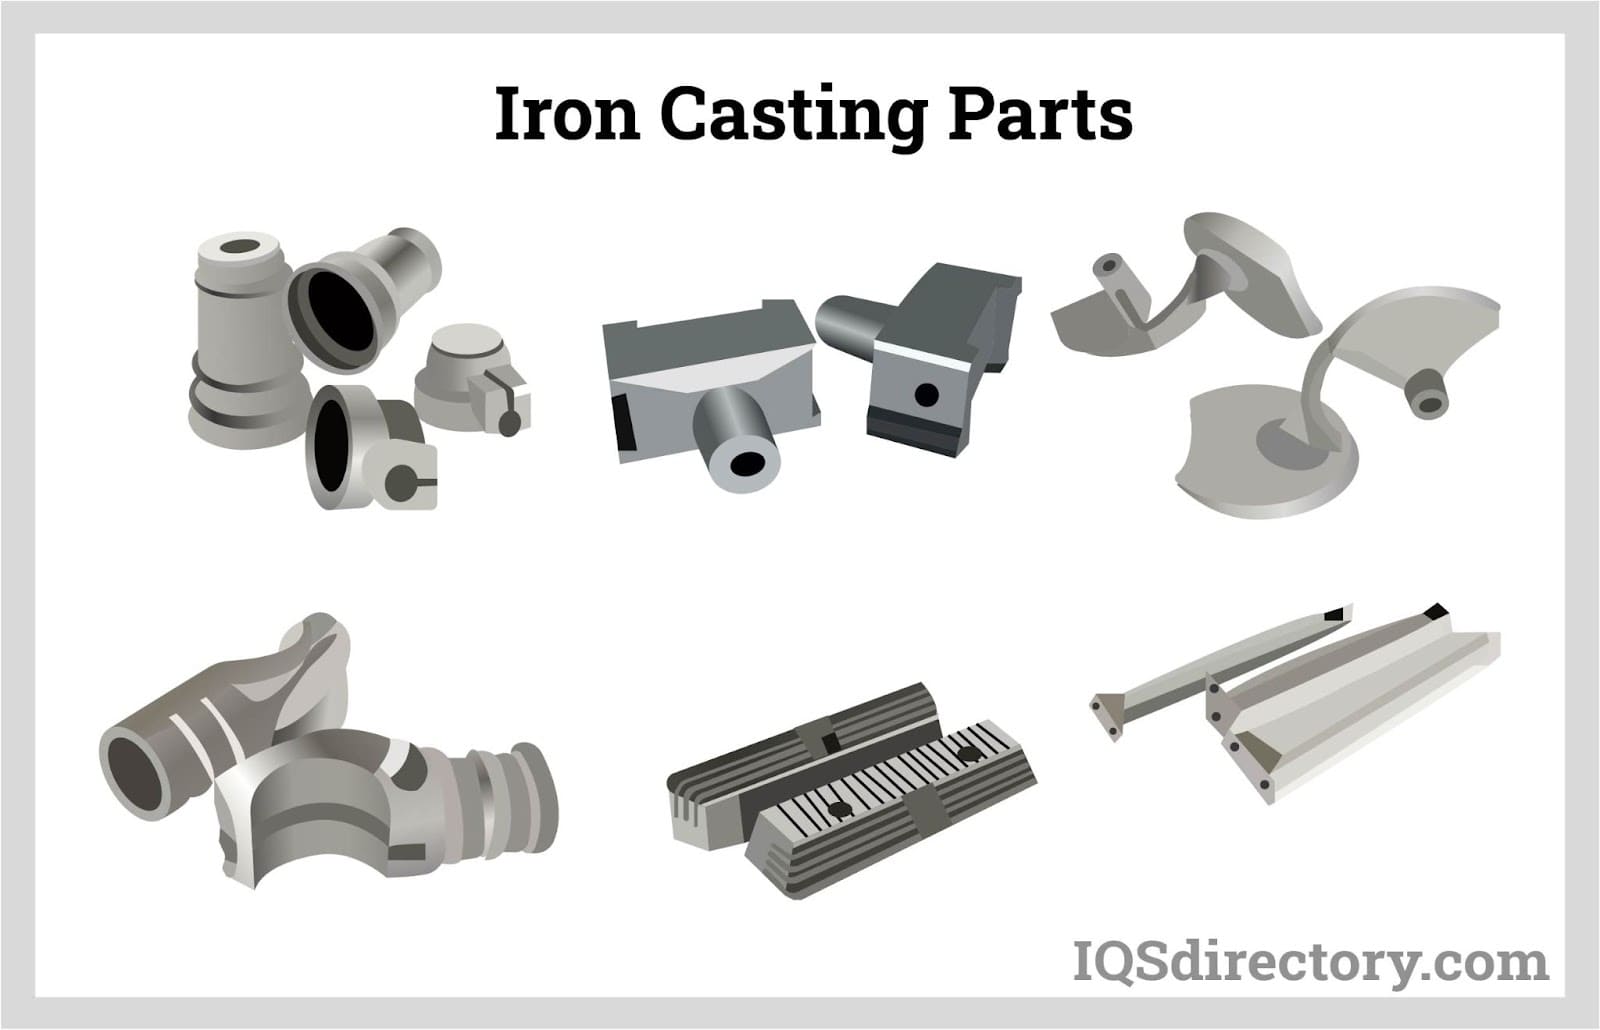 Iron Casting Parts